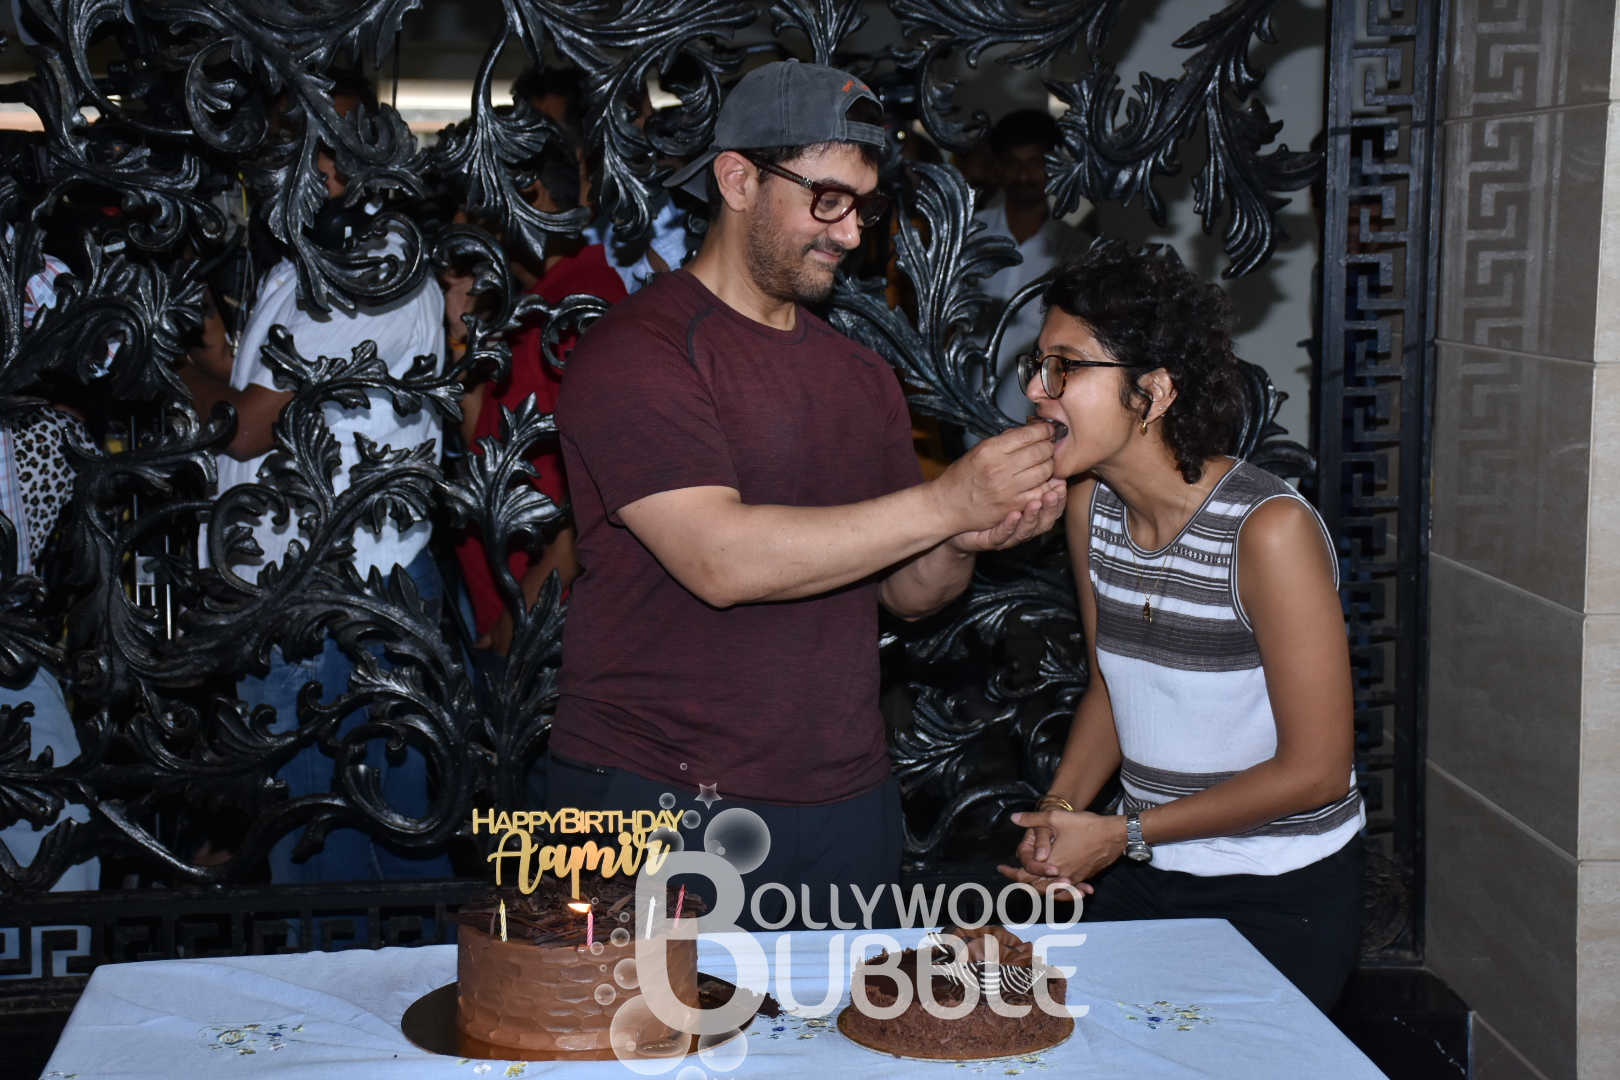 Aamir feeding cake to his wife